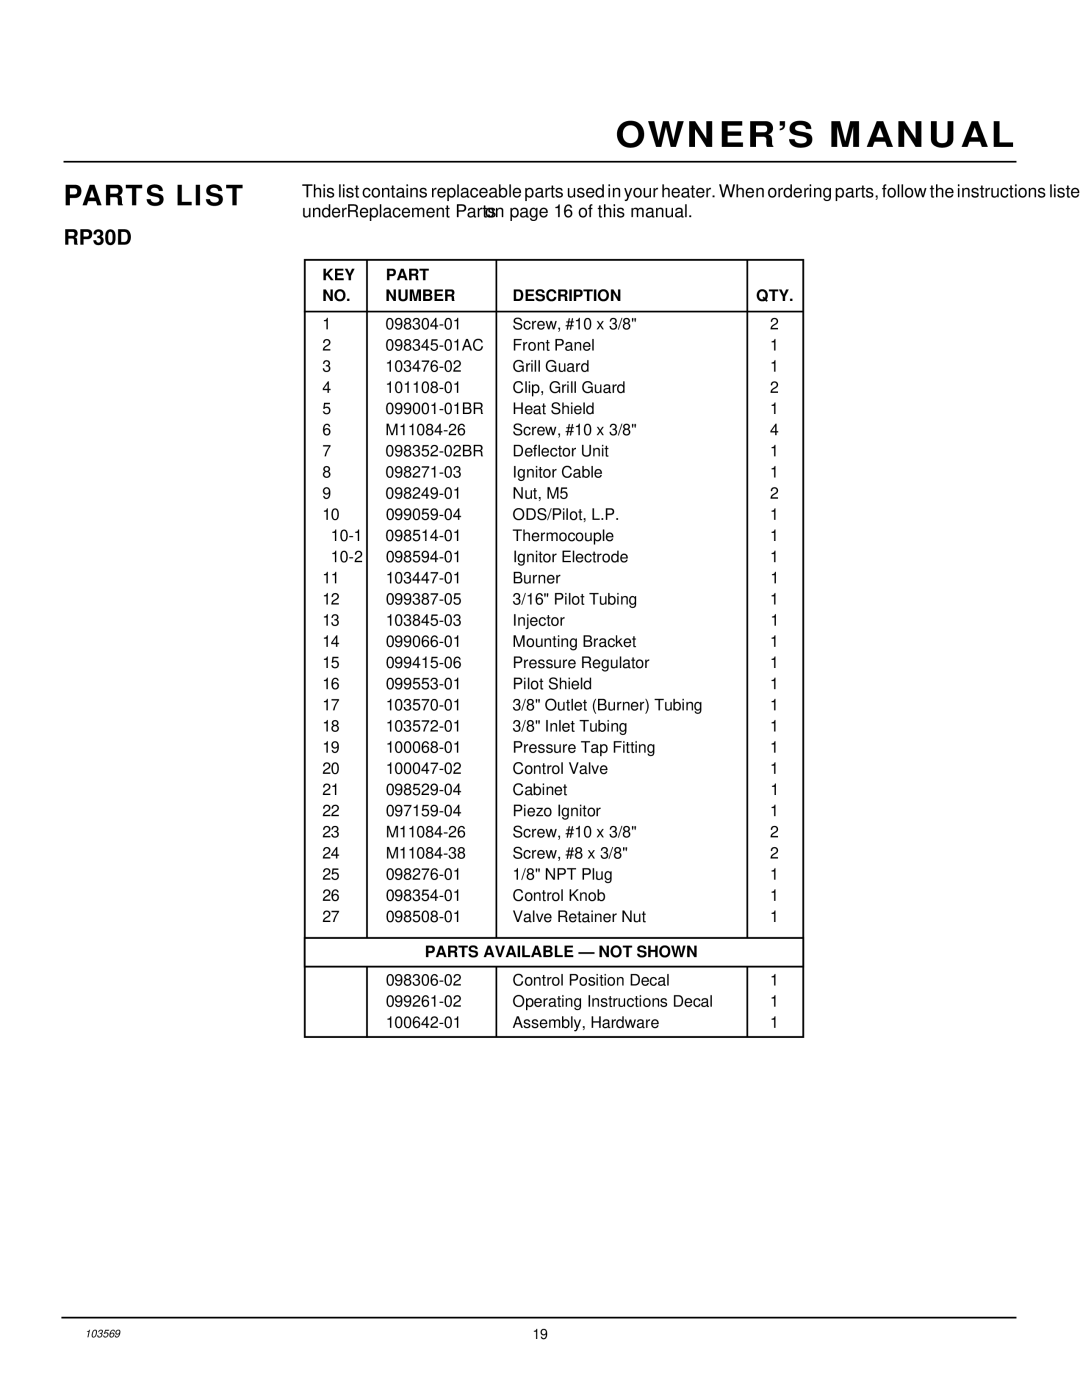 Desa RP30D, CGP20L installation manual Parts List, KEY Part Number Description QTY 